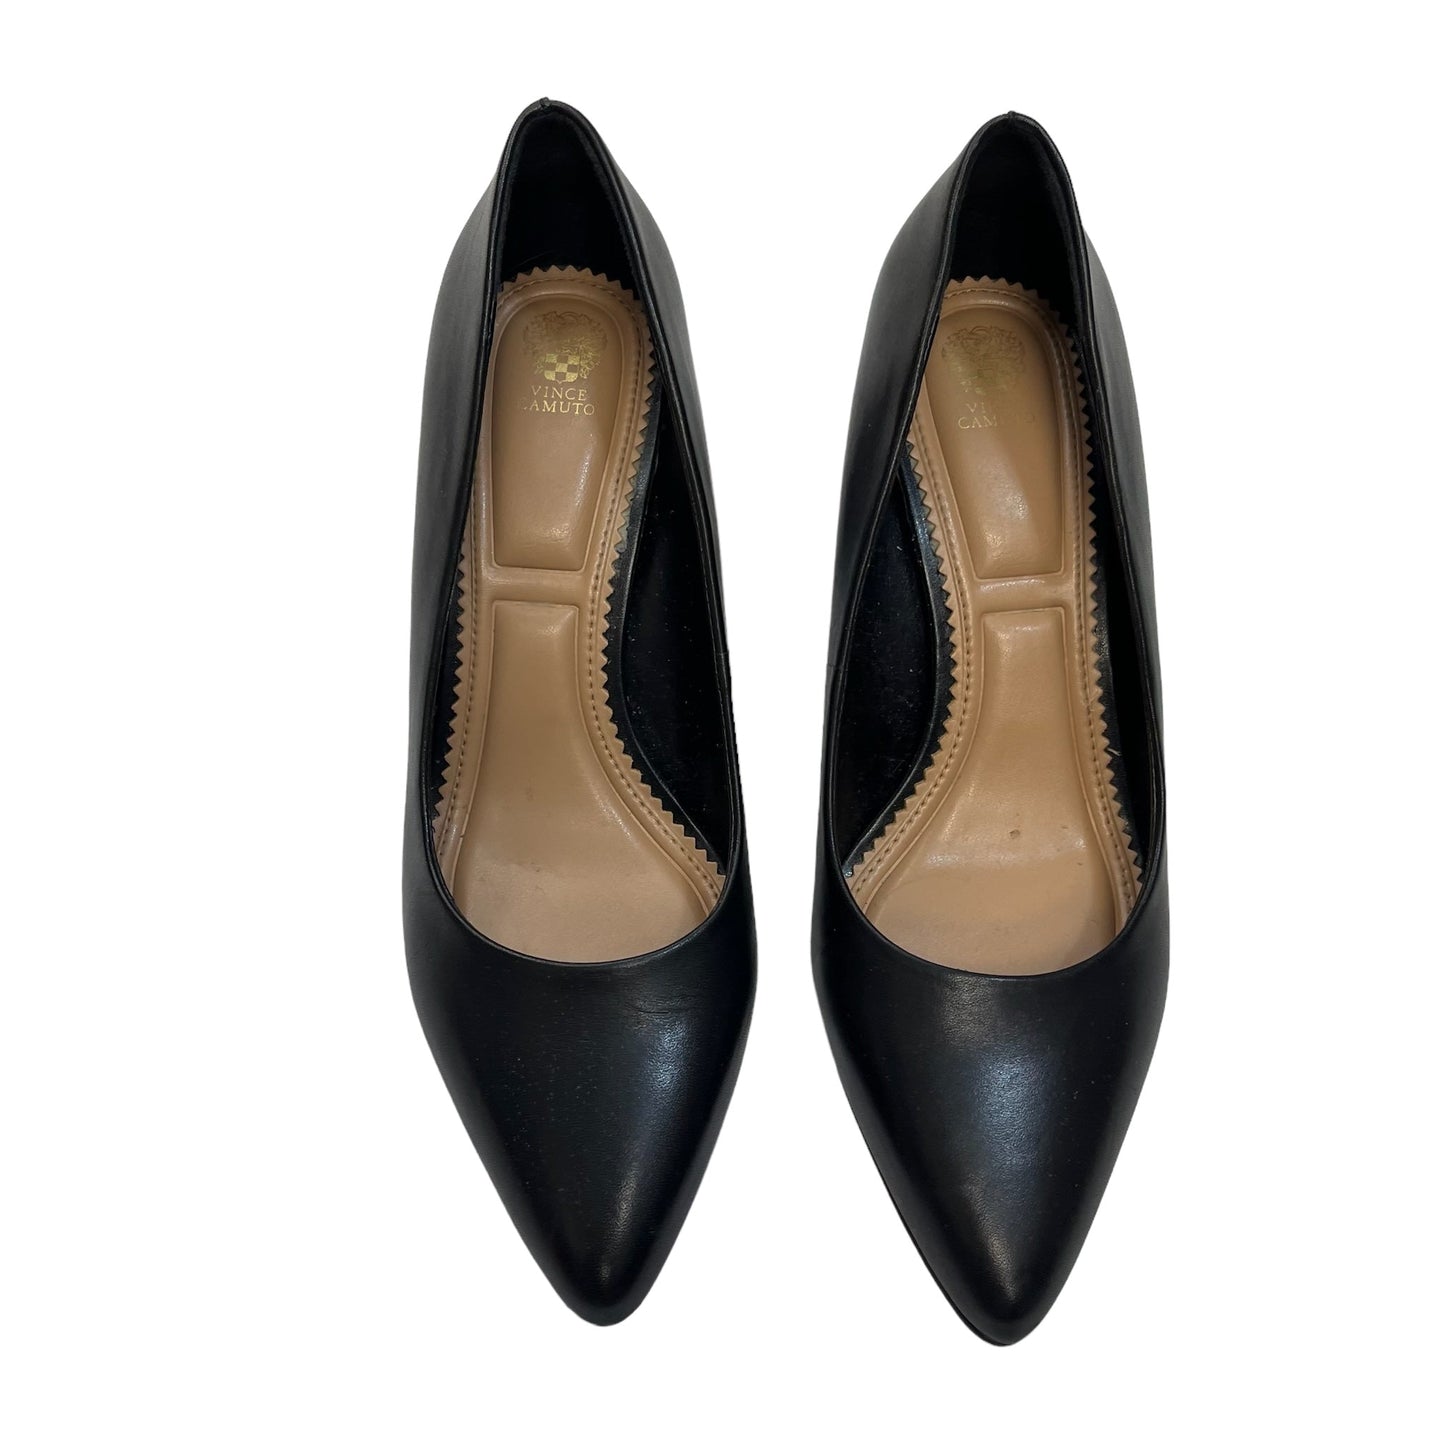 Black Shoes Heels Block Vince Camuto, Size 7.5